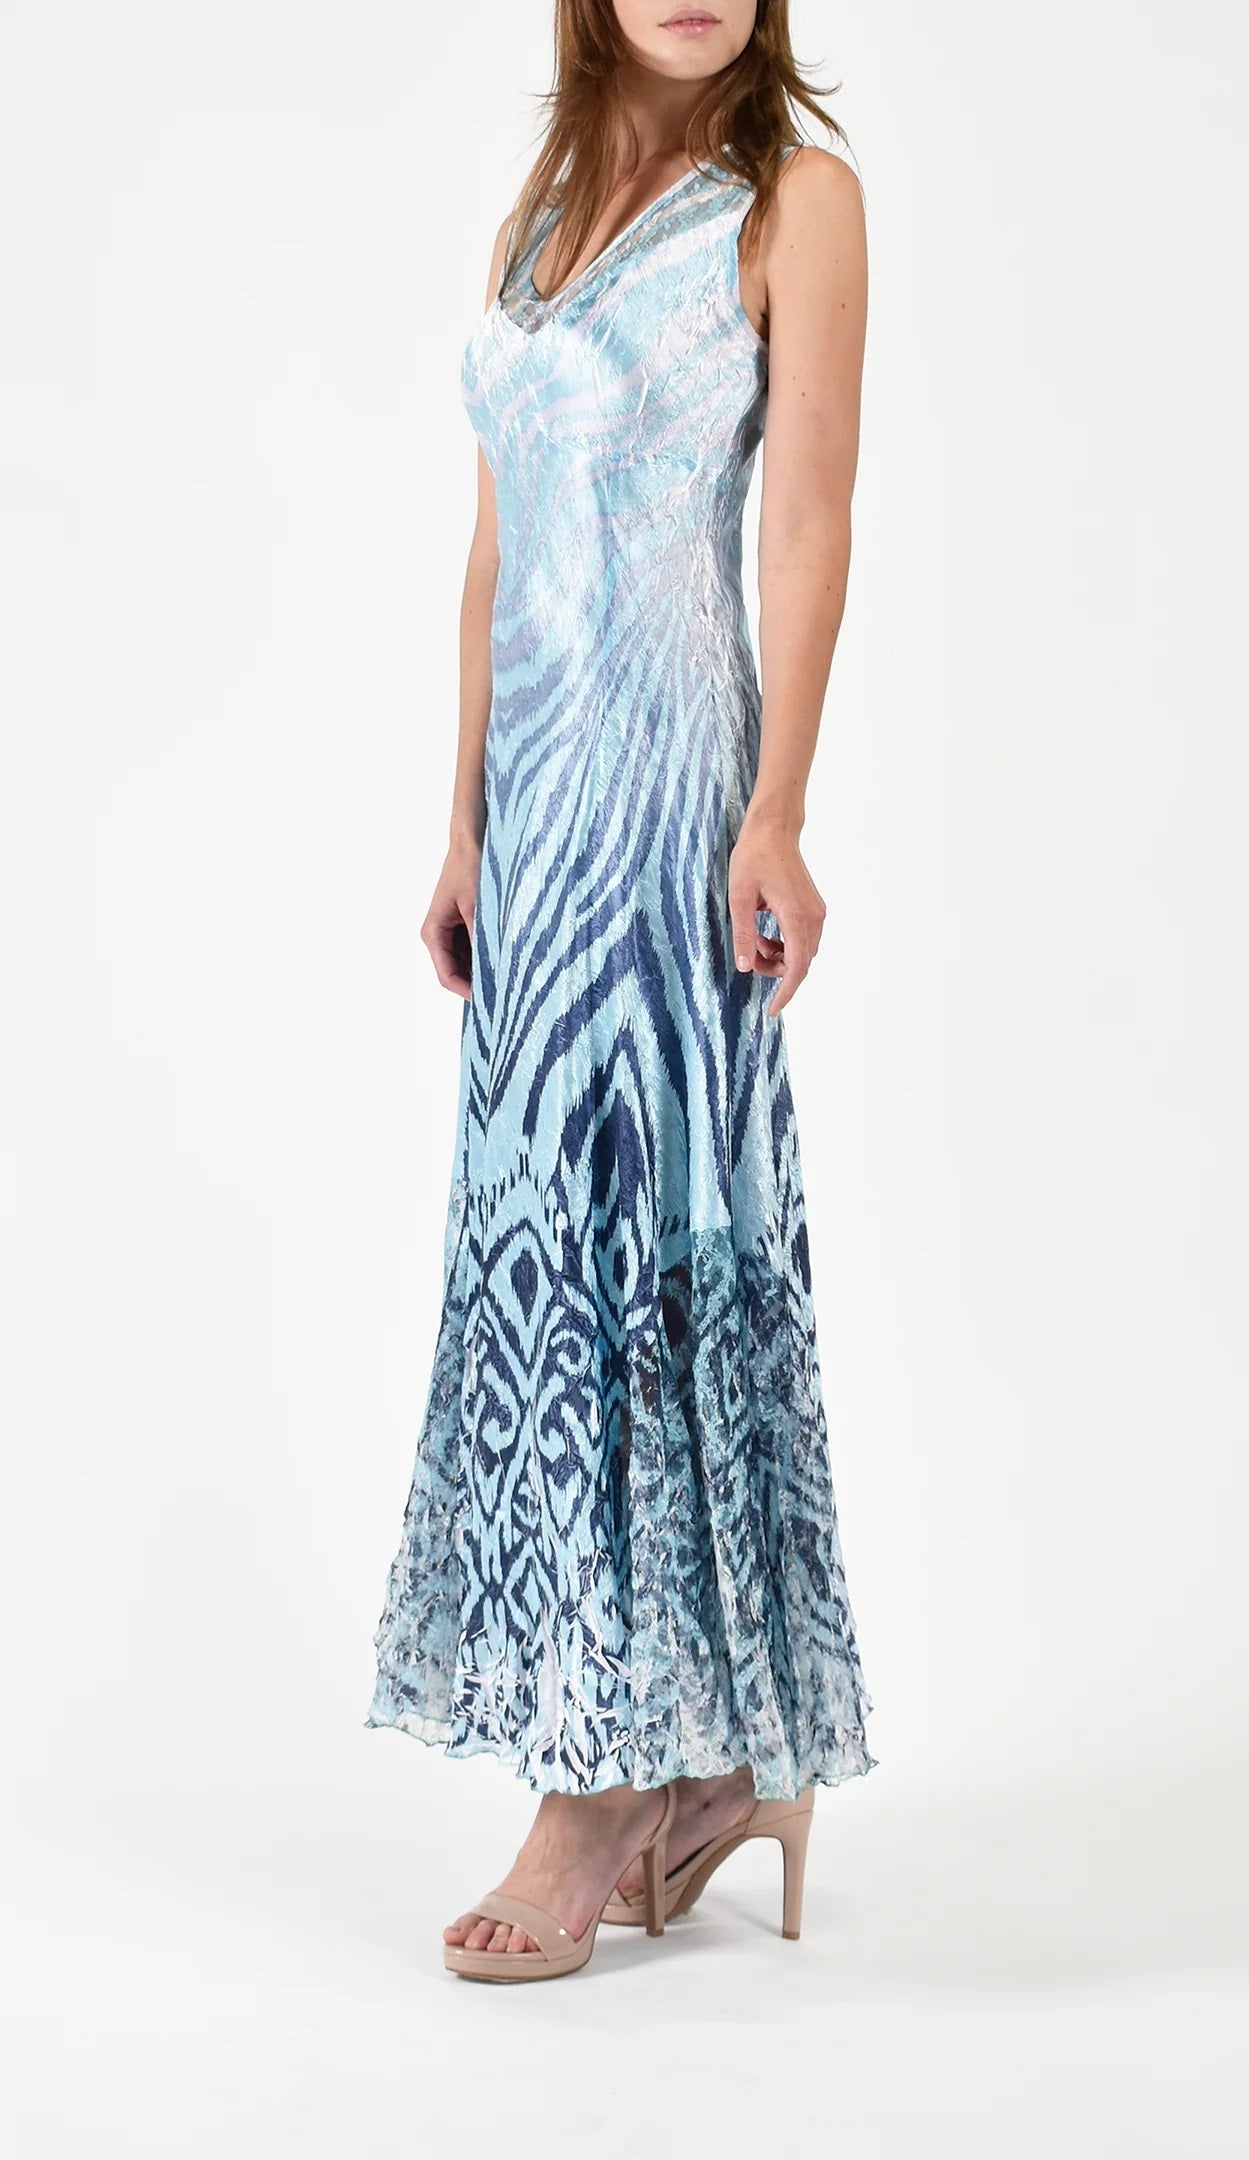 Aqua Ikat Zebra Print Dress